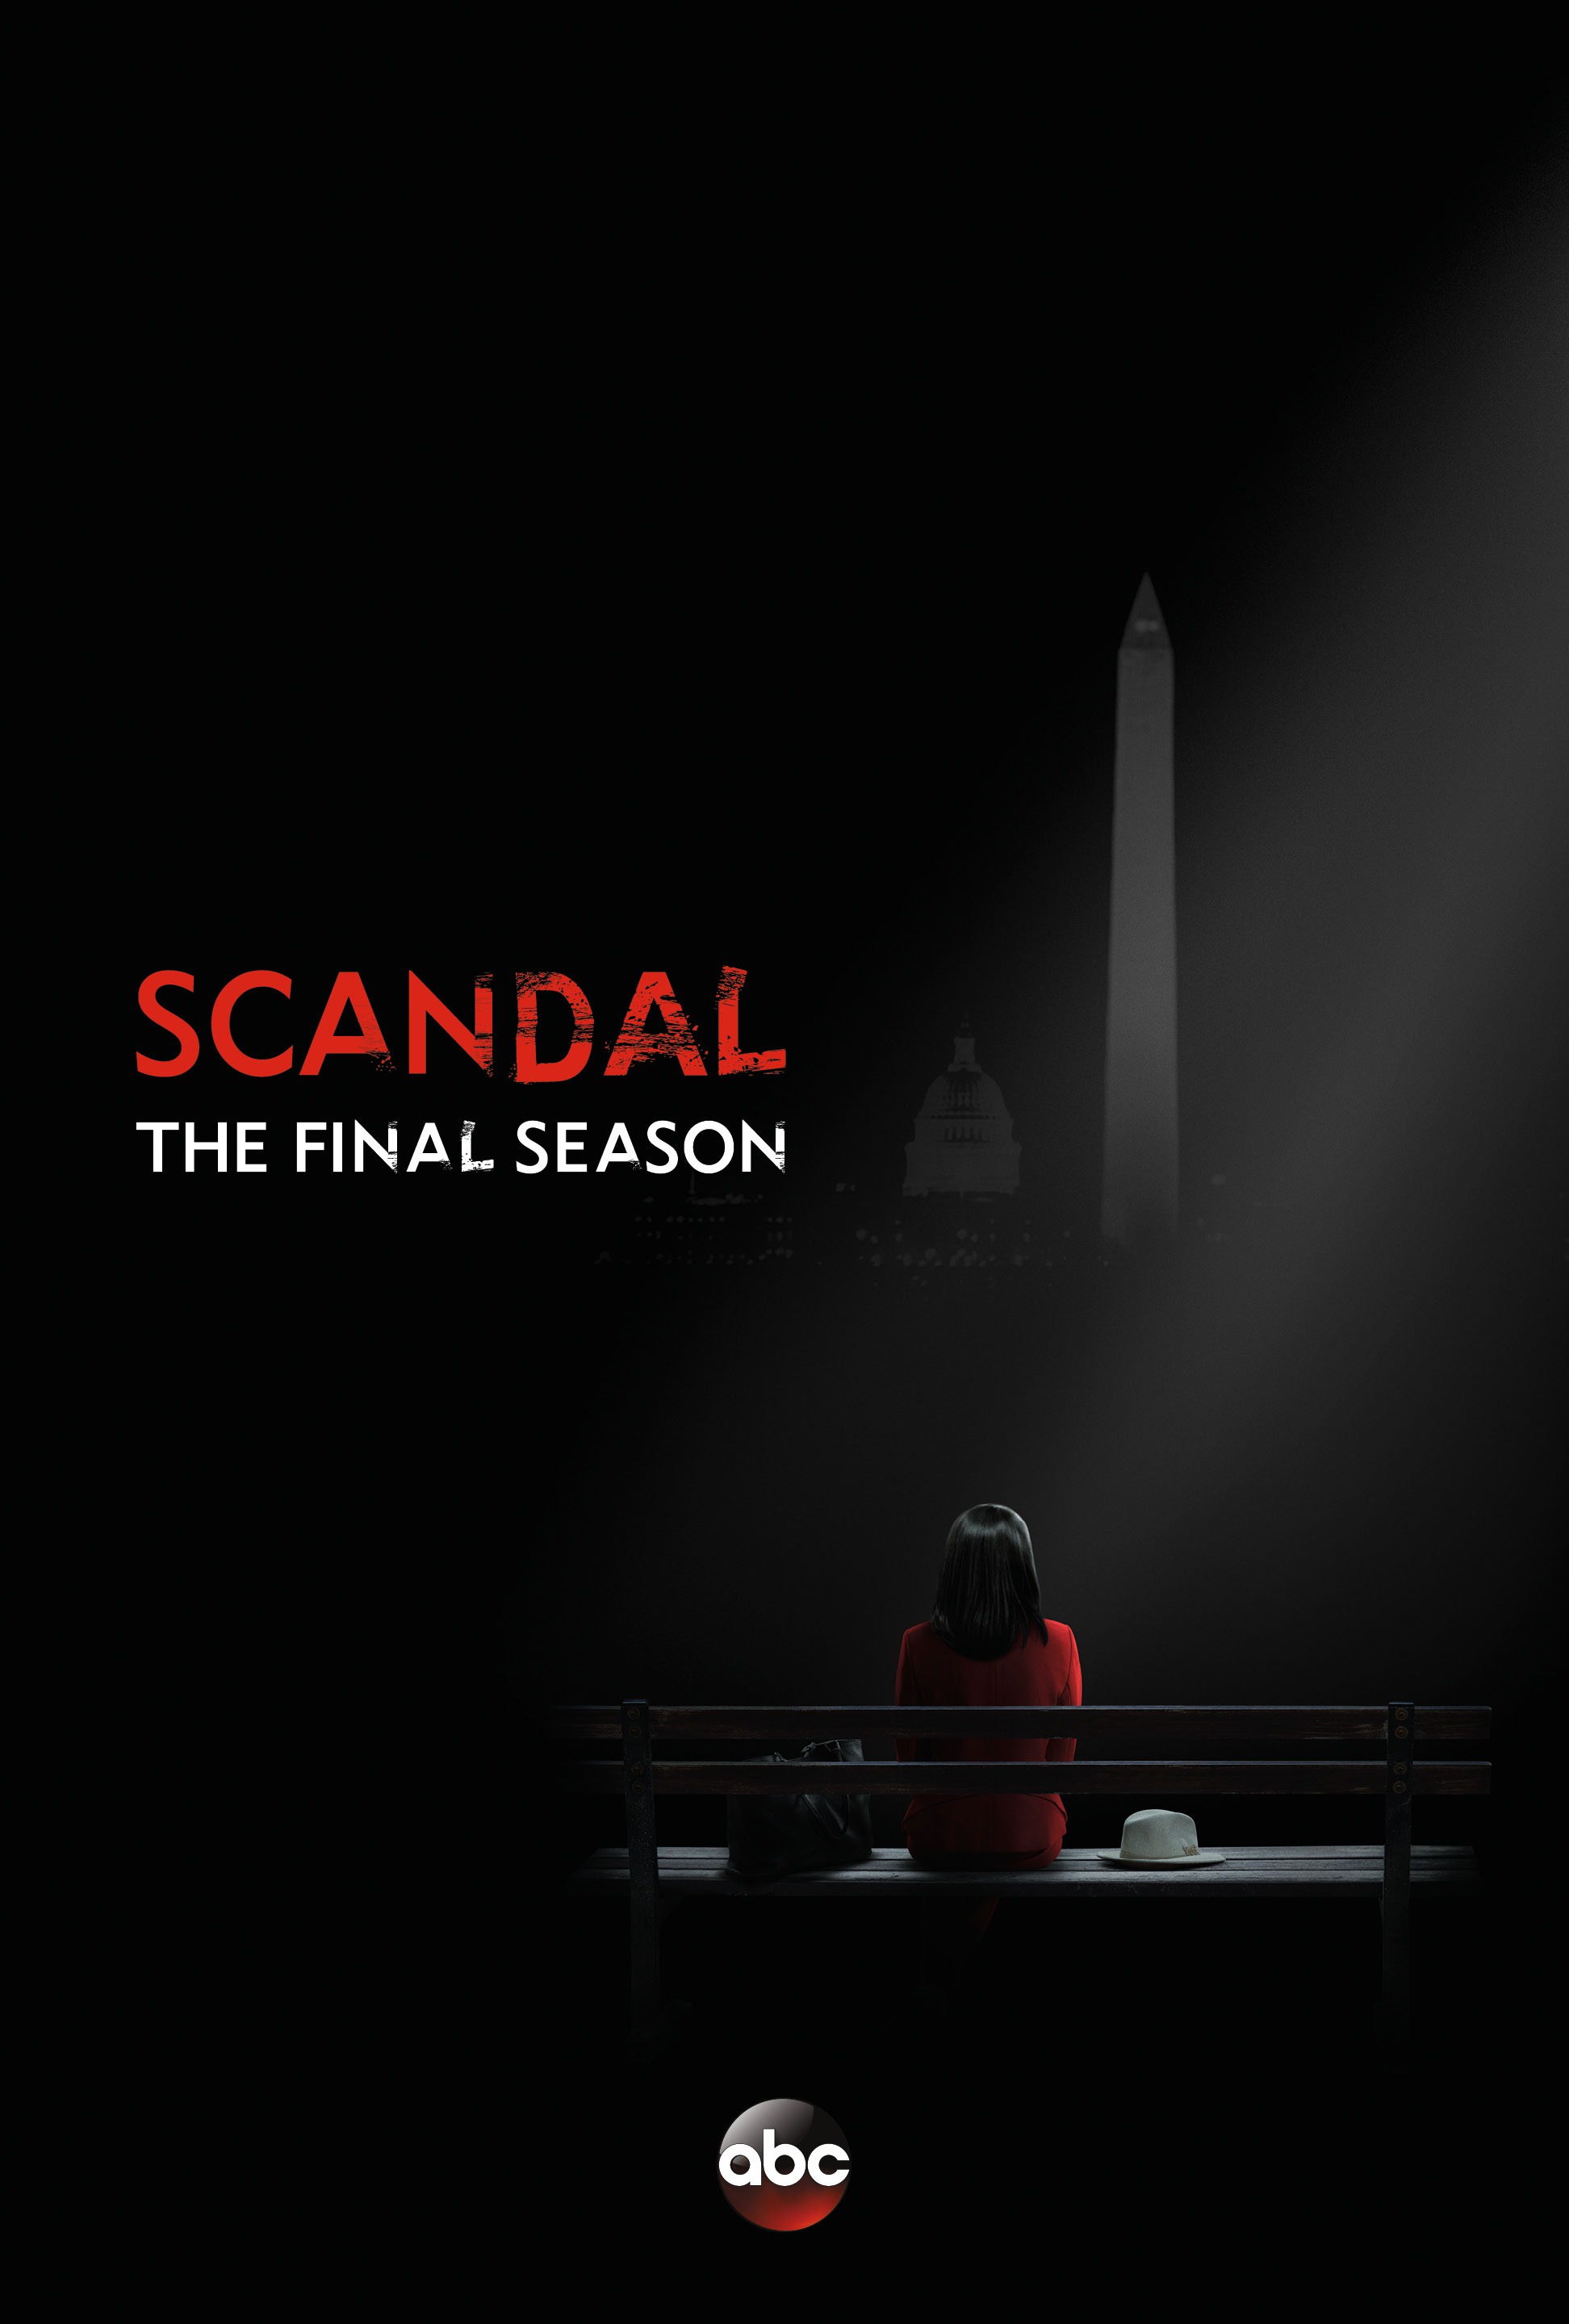 Mega Sized TV Poster Image for Scandal (#12 of 12)